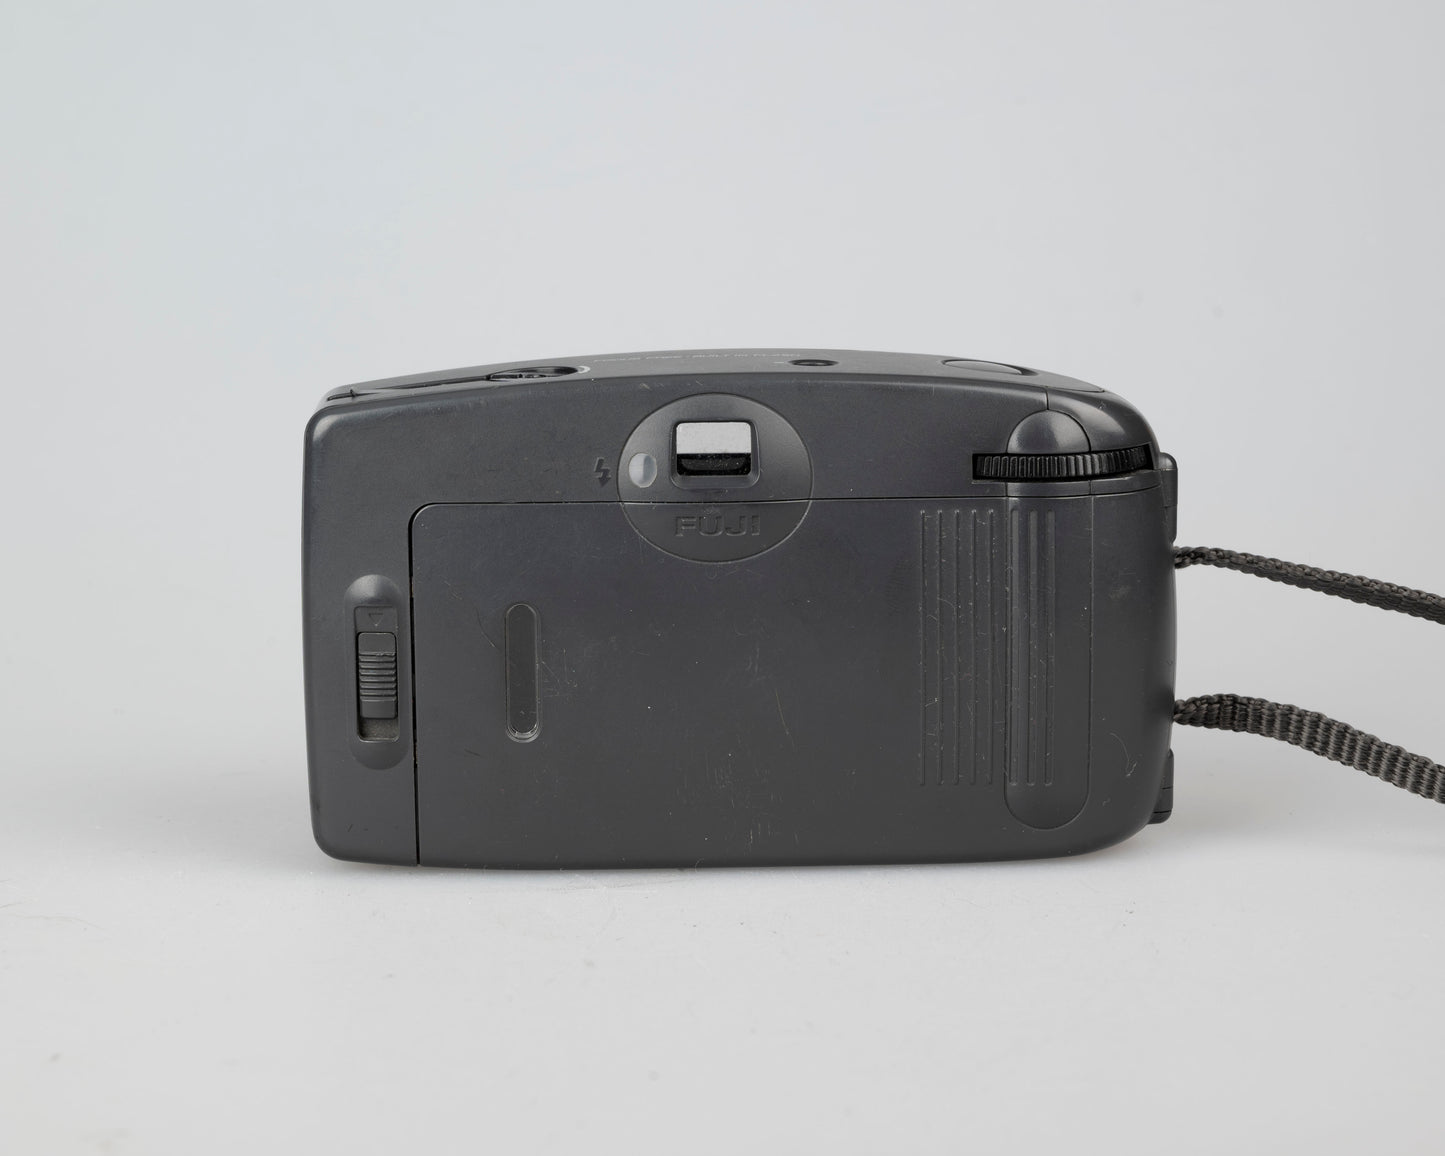 Fuji FZ-5 35mm film camera (serial 70716841)